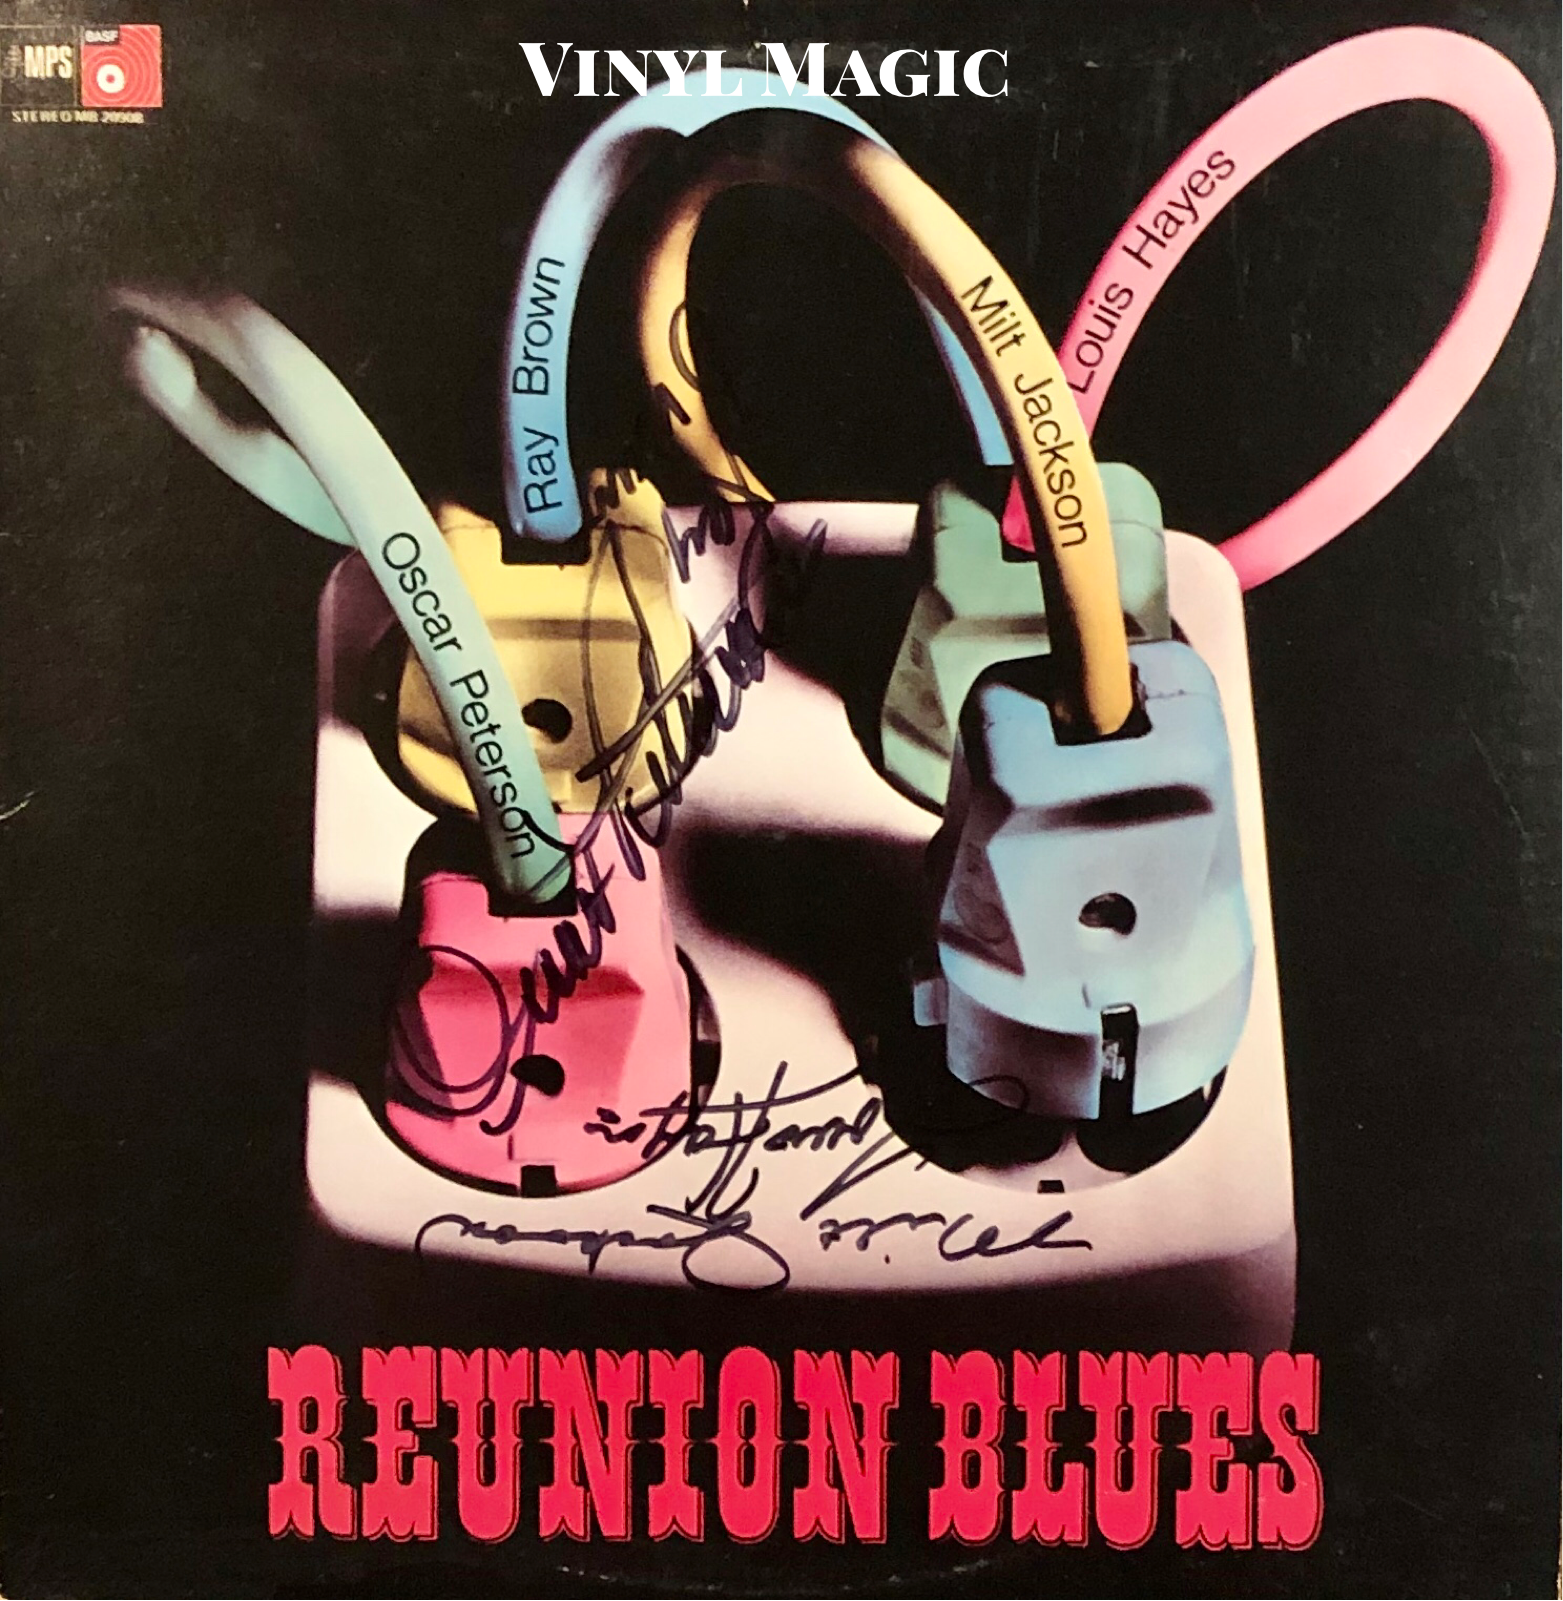 Ray Brown and Me… — Vinyl Magic